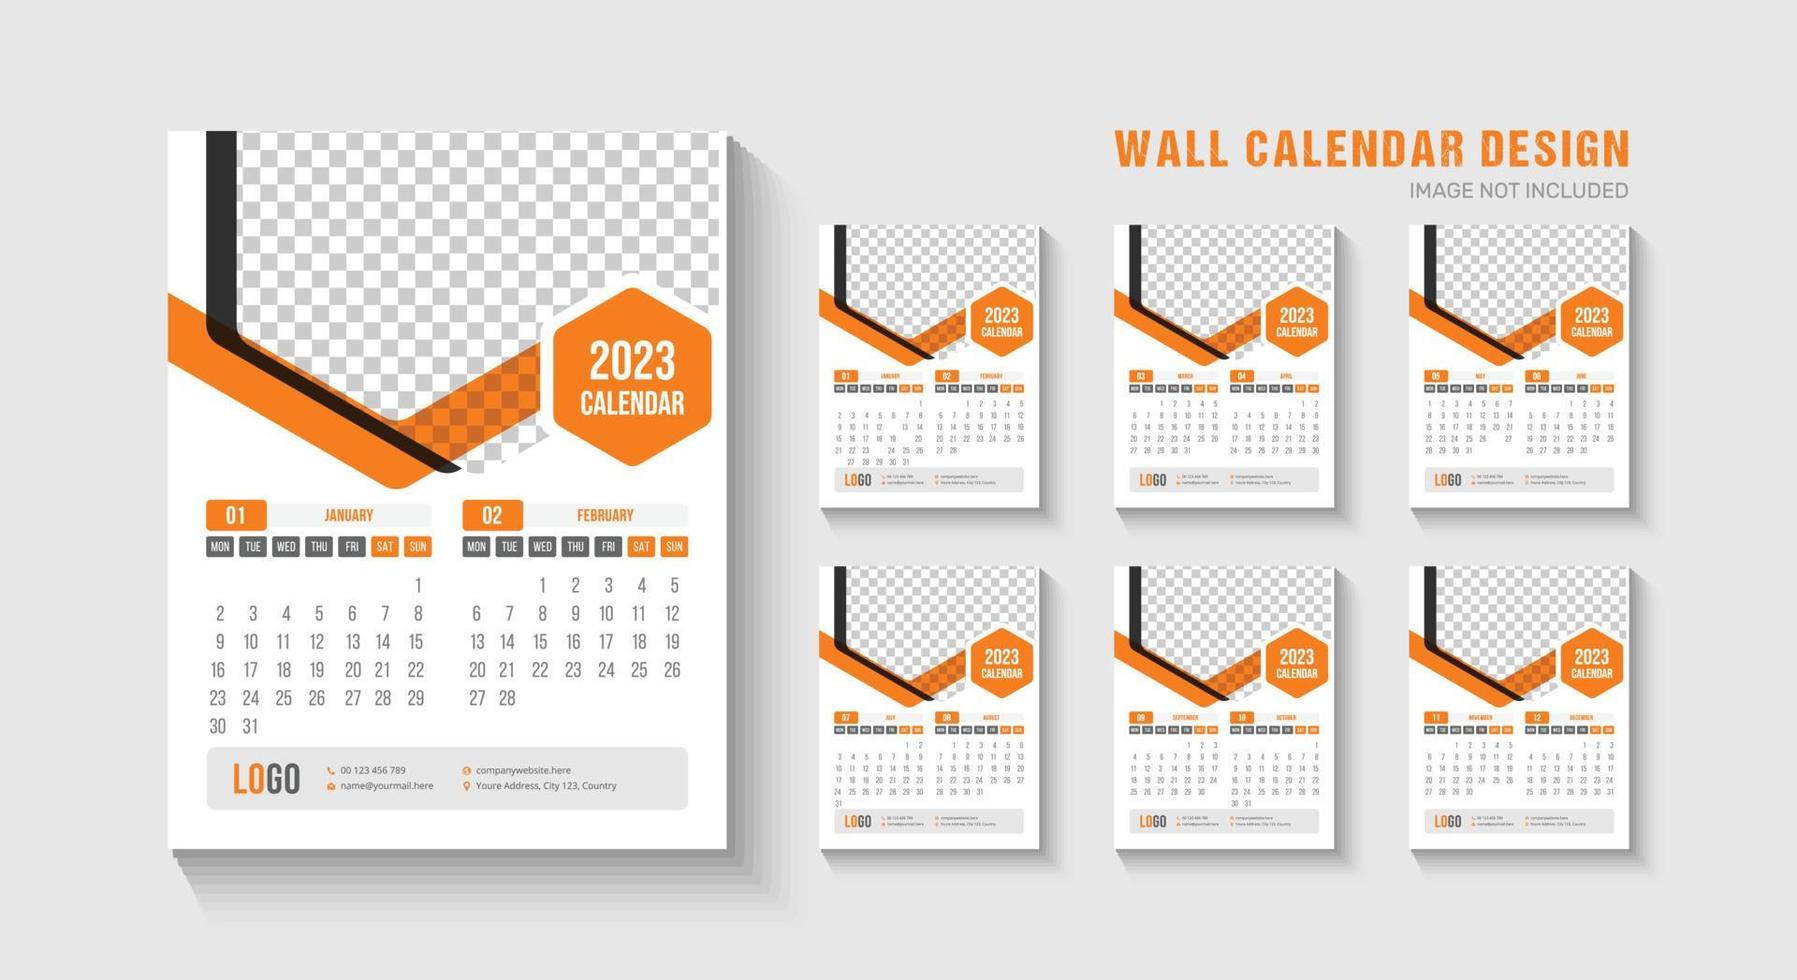 2023 wall calendar template design vector